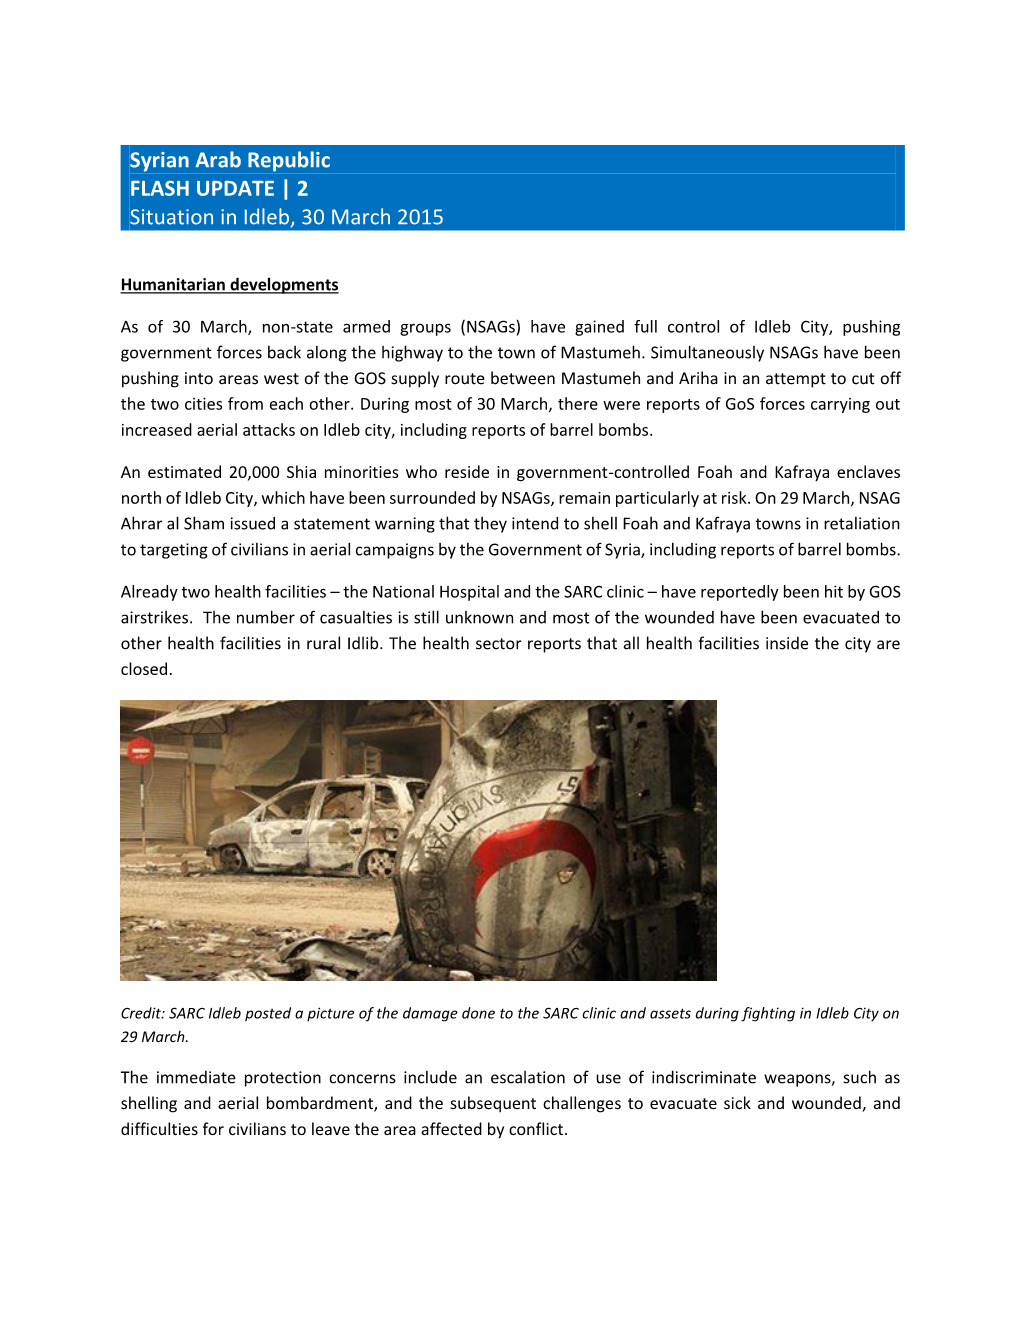 Syrian Arab Republic FLASH UPDATE | 2 Situation in Idleb, 30 March 2015